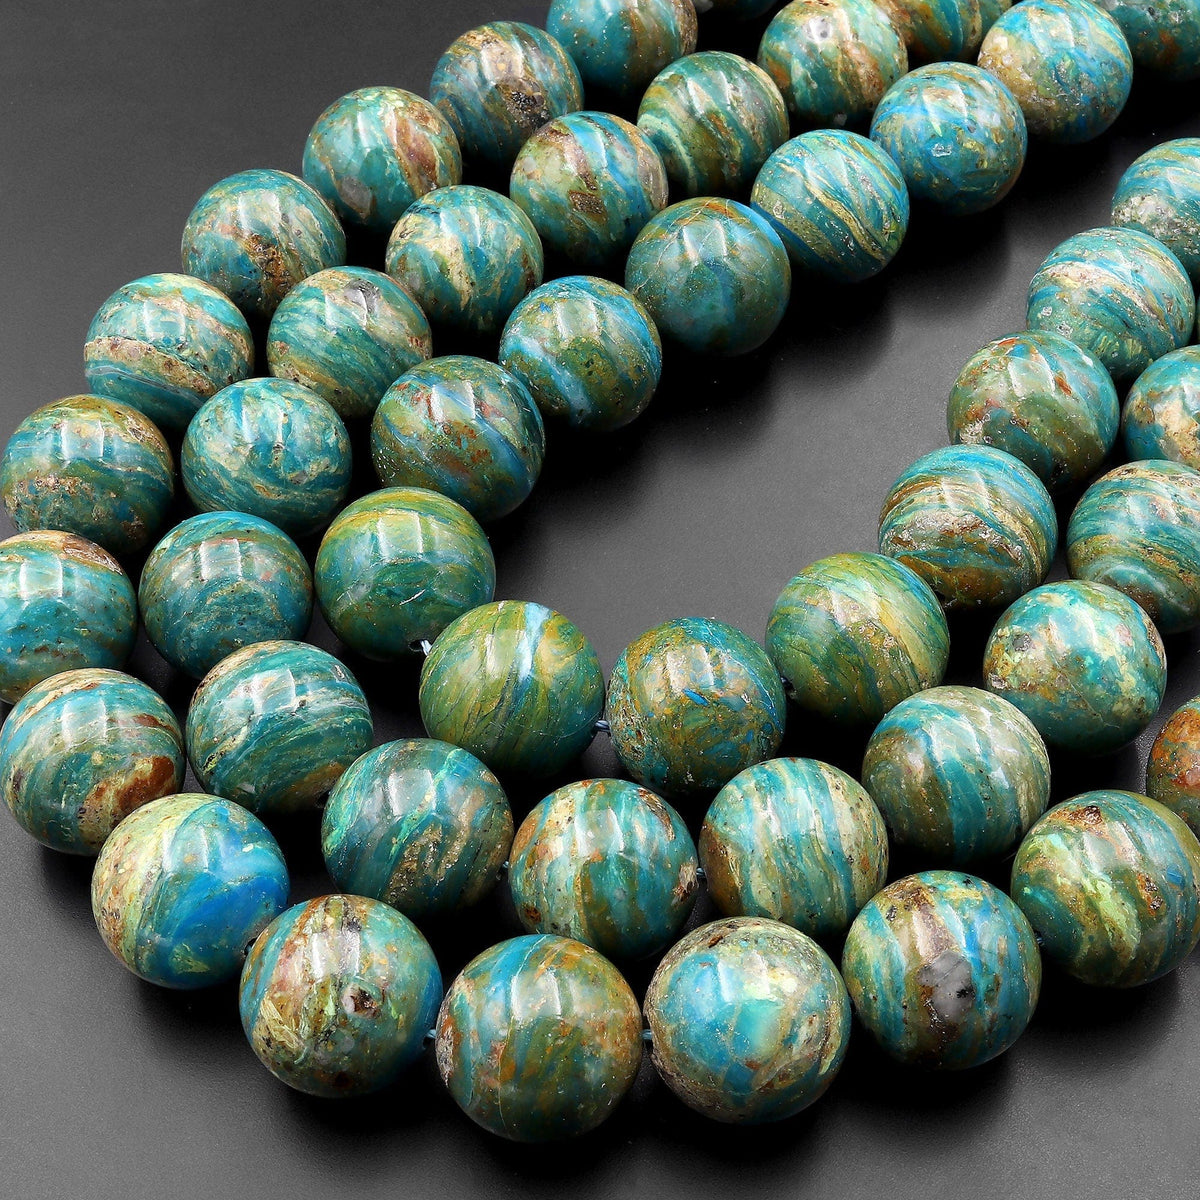 Blue Peruvian Opal Gemstone Plain Roundels Beads 15 Inch Strand Size - 8 to  9 MM Gemstone Making Jewelry | Stone Blue Opal Beads [NFBA 03]